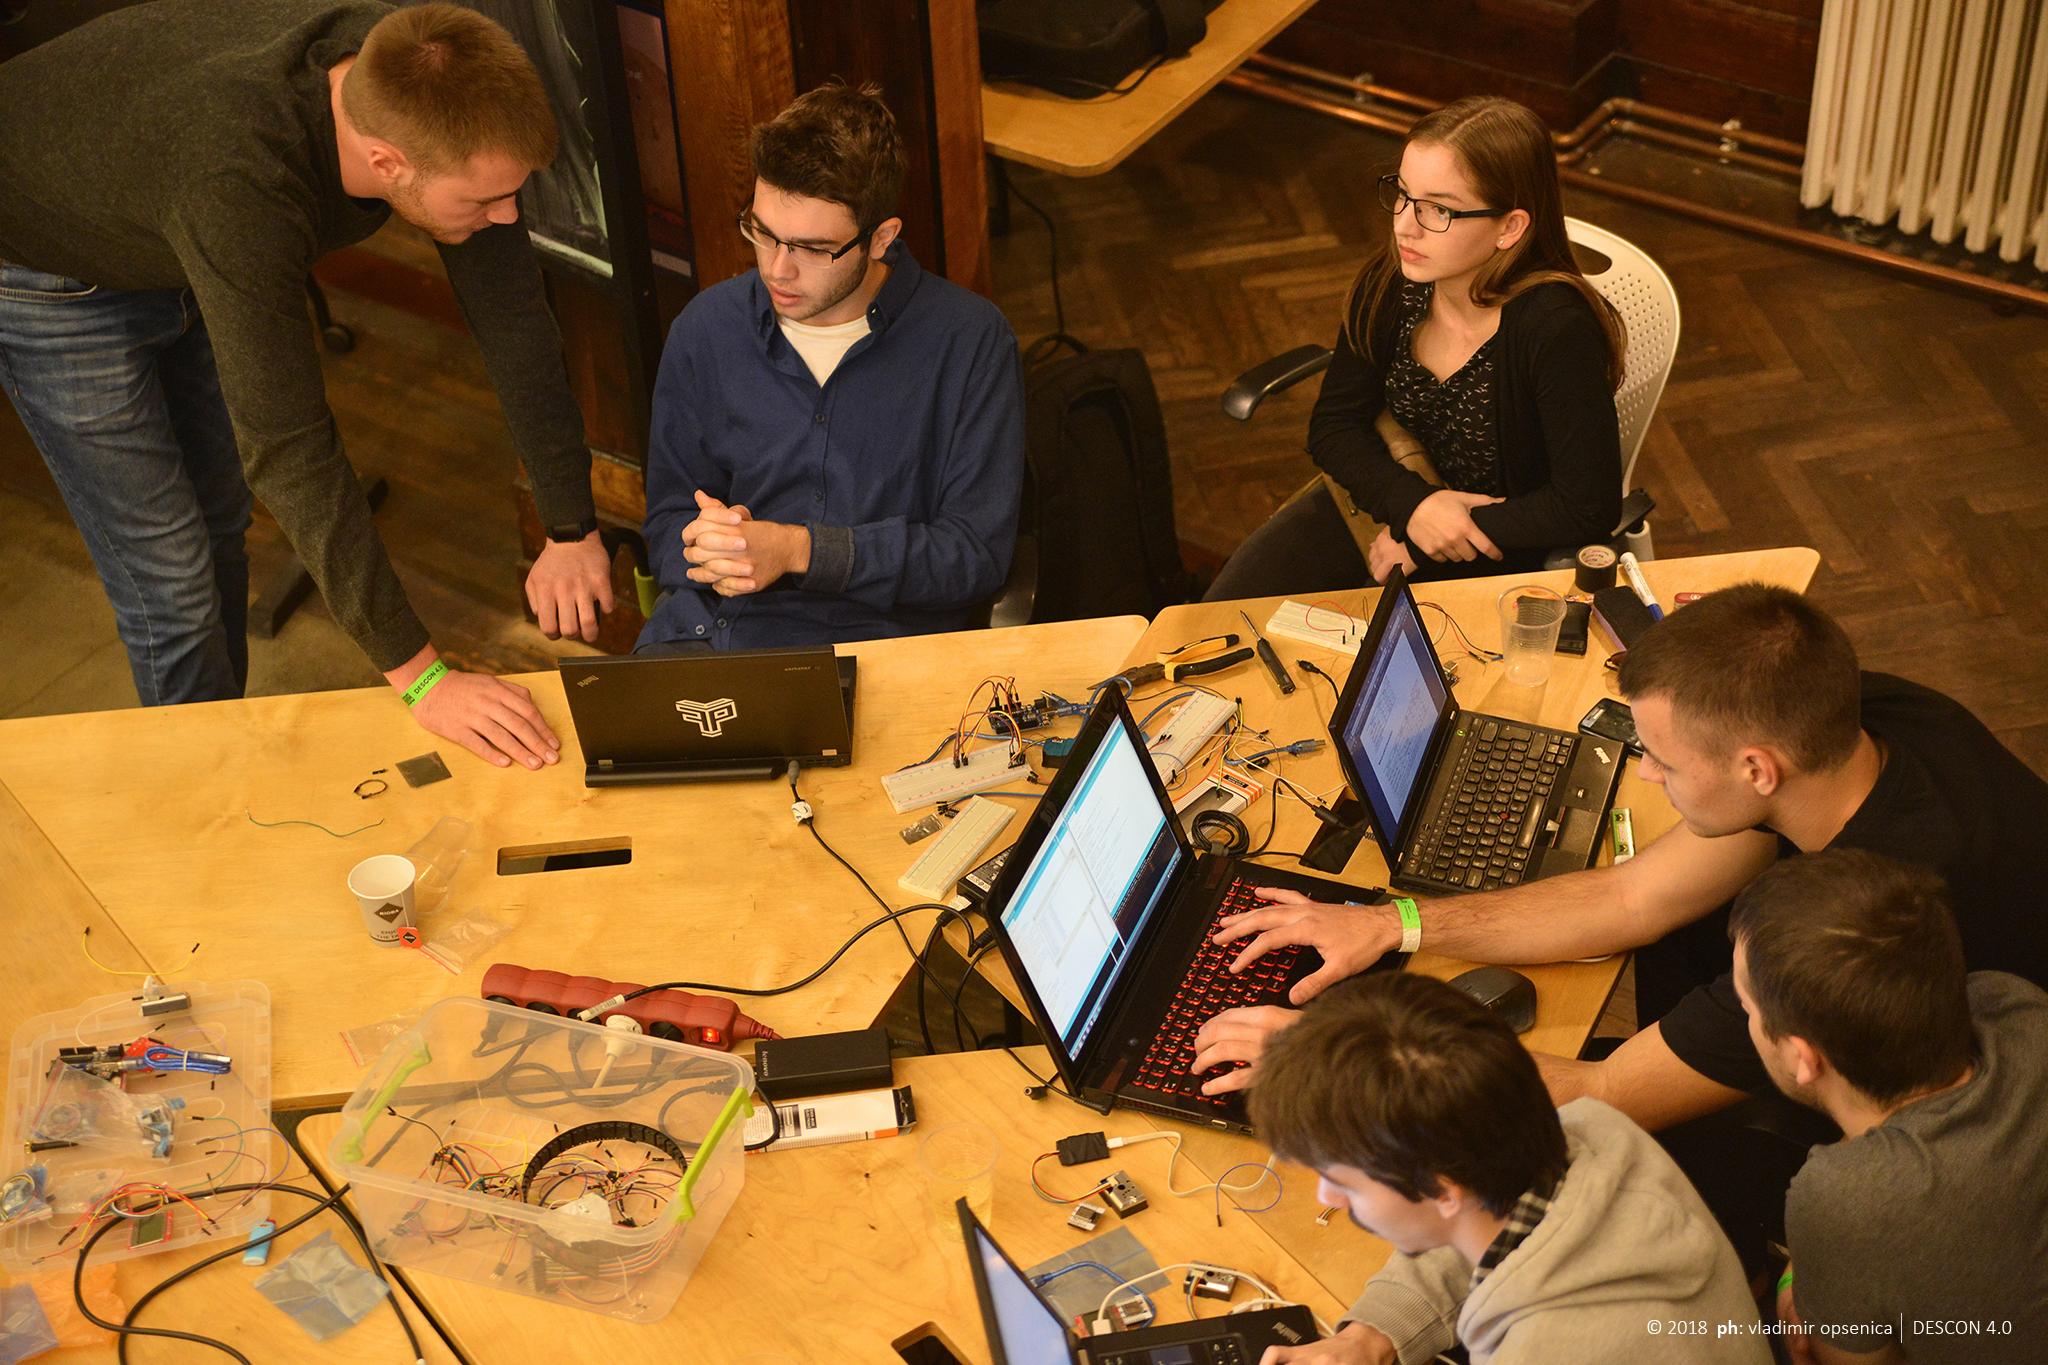 Radna atmosfera sa laptopovima za stolom tokom hakatona